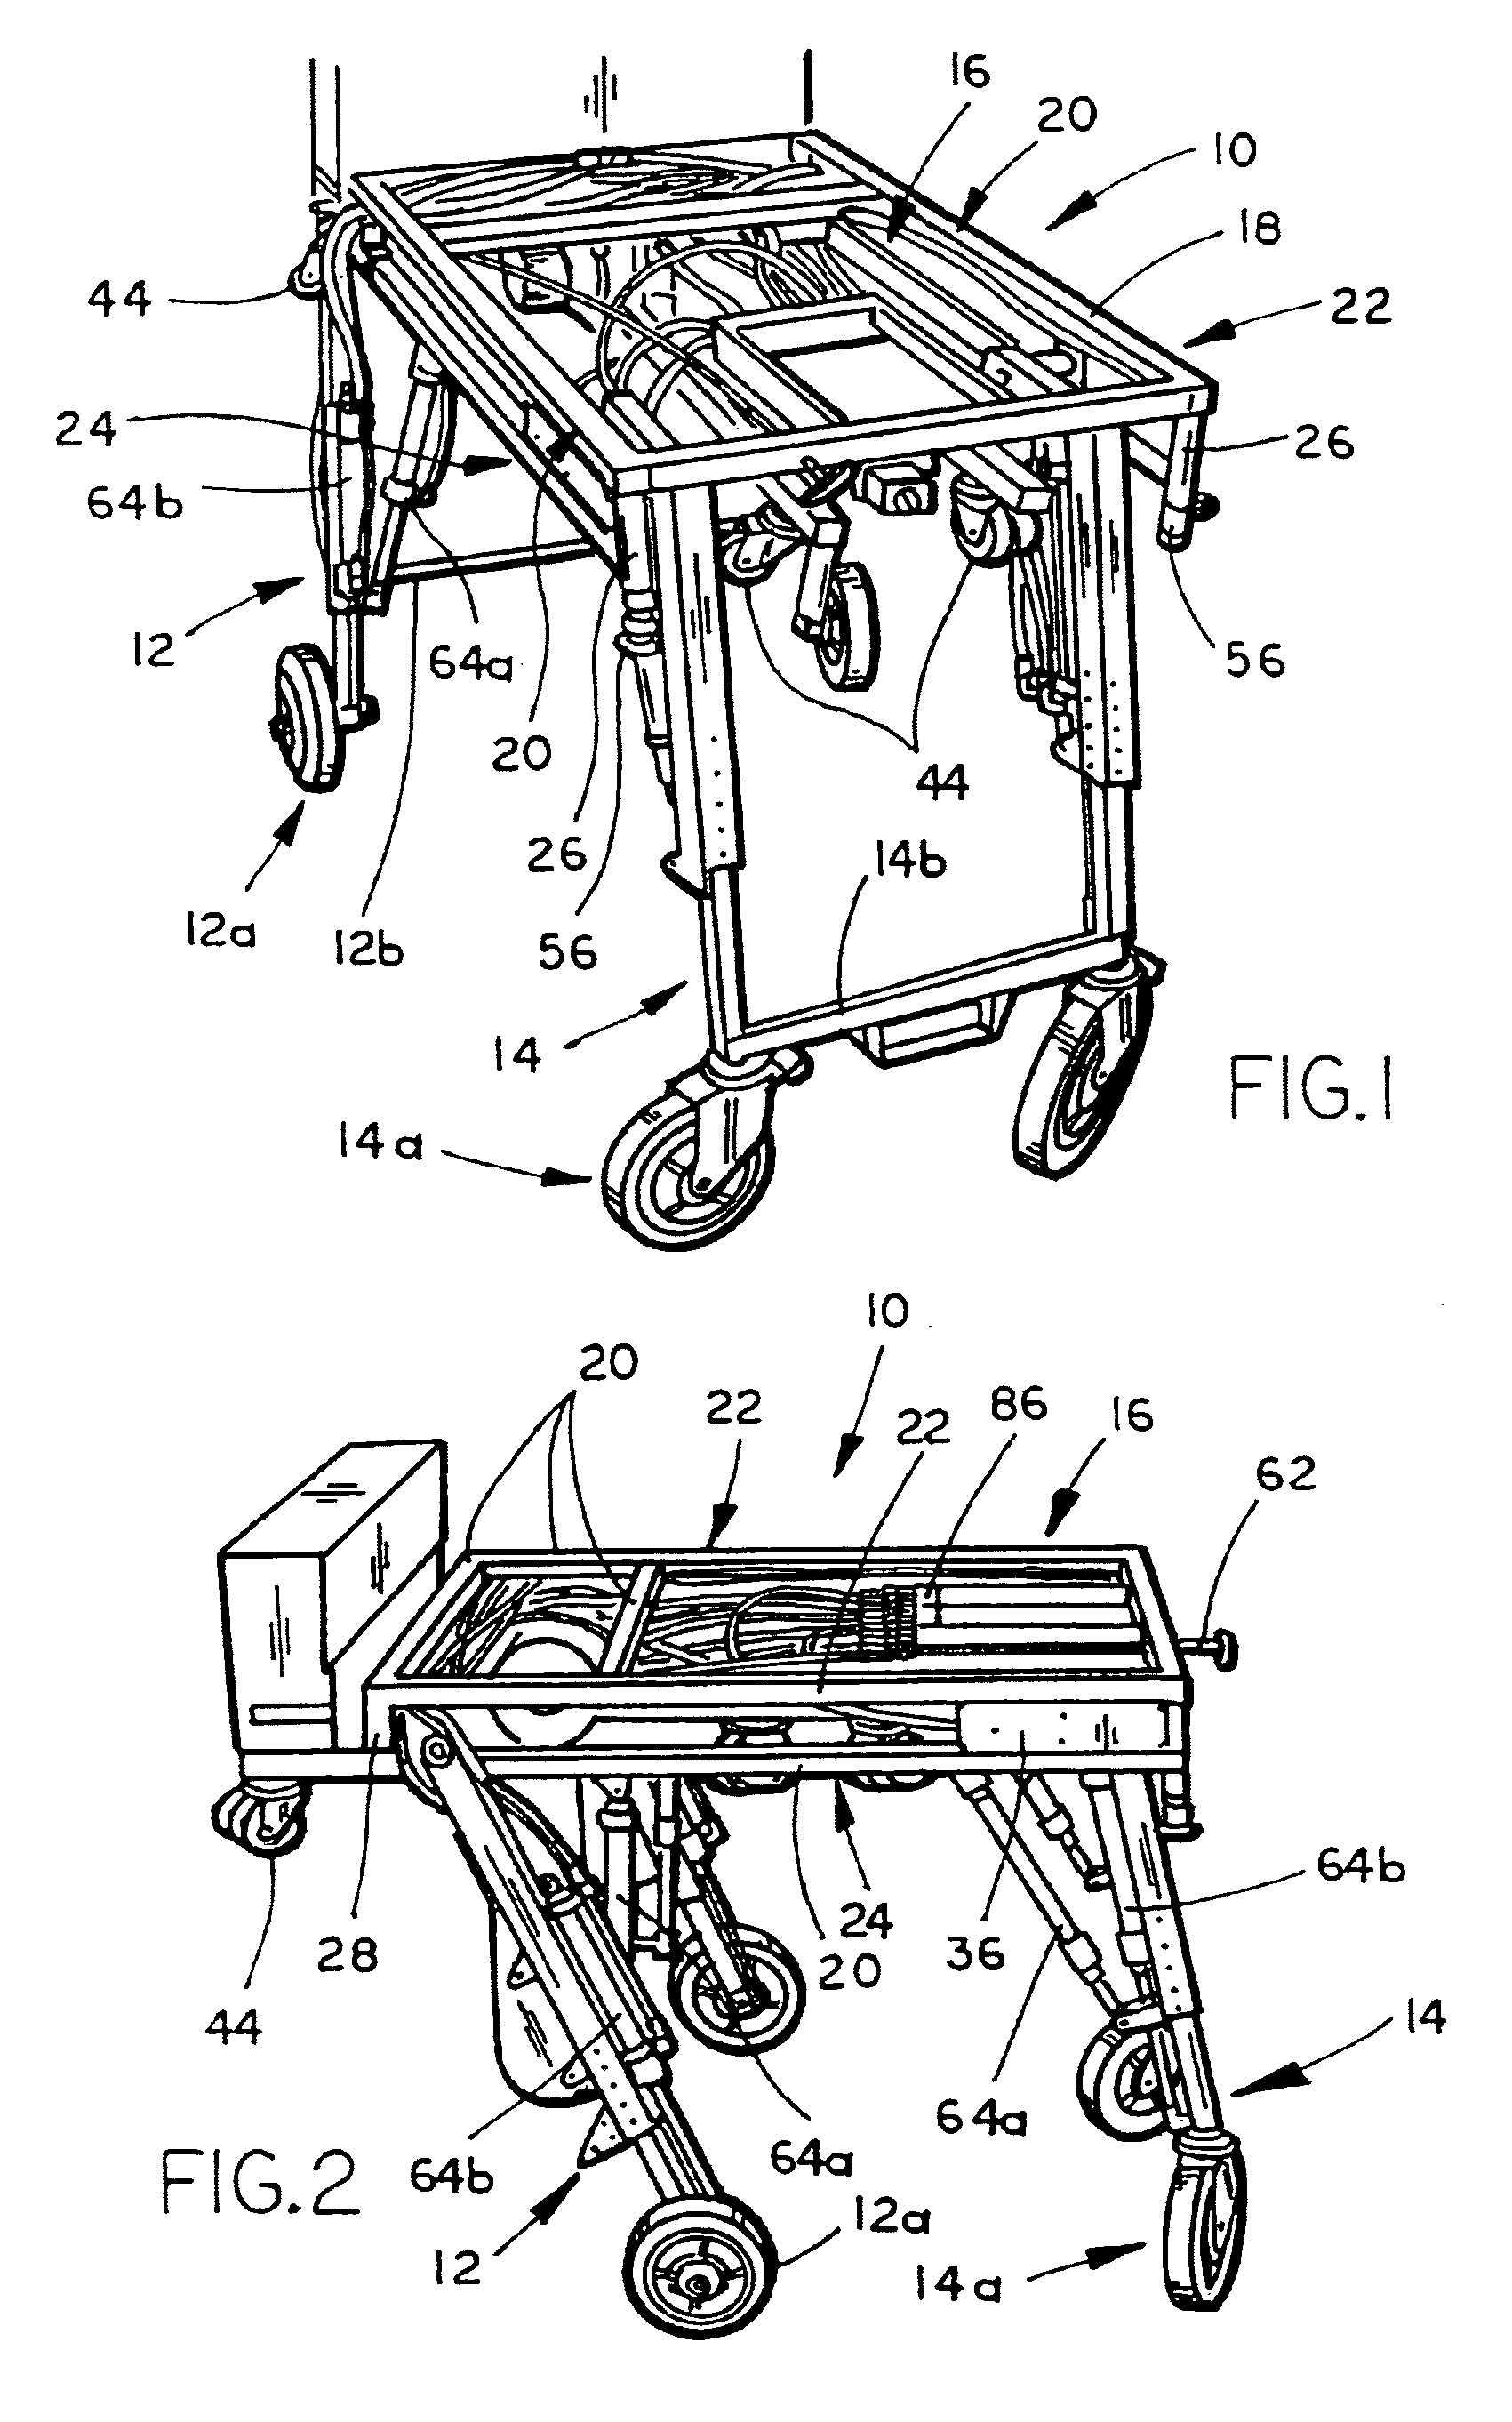 Transportable medical apparatus